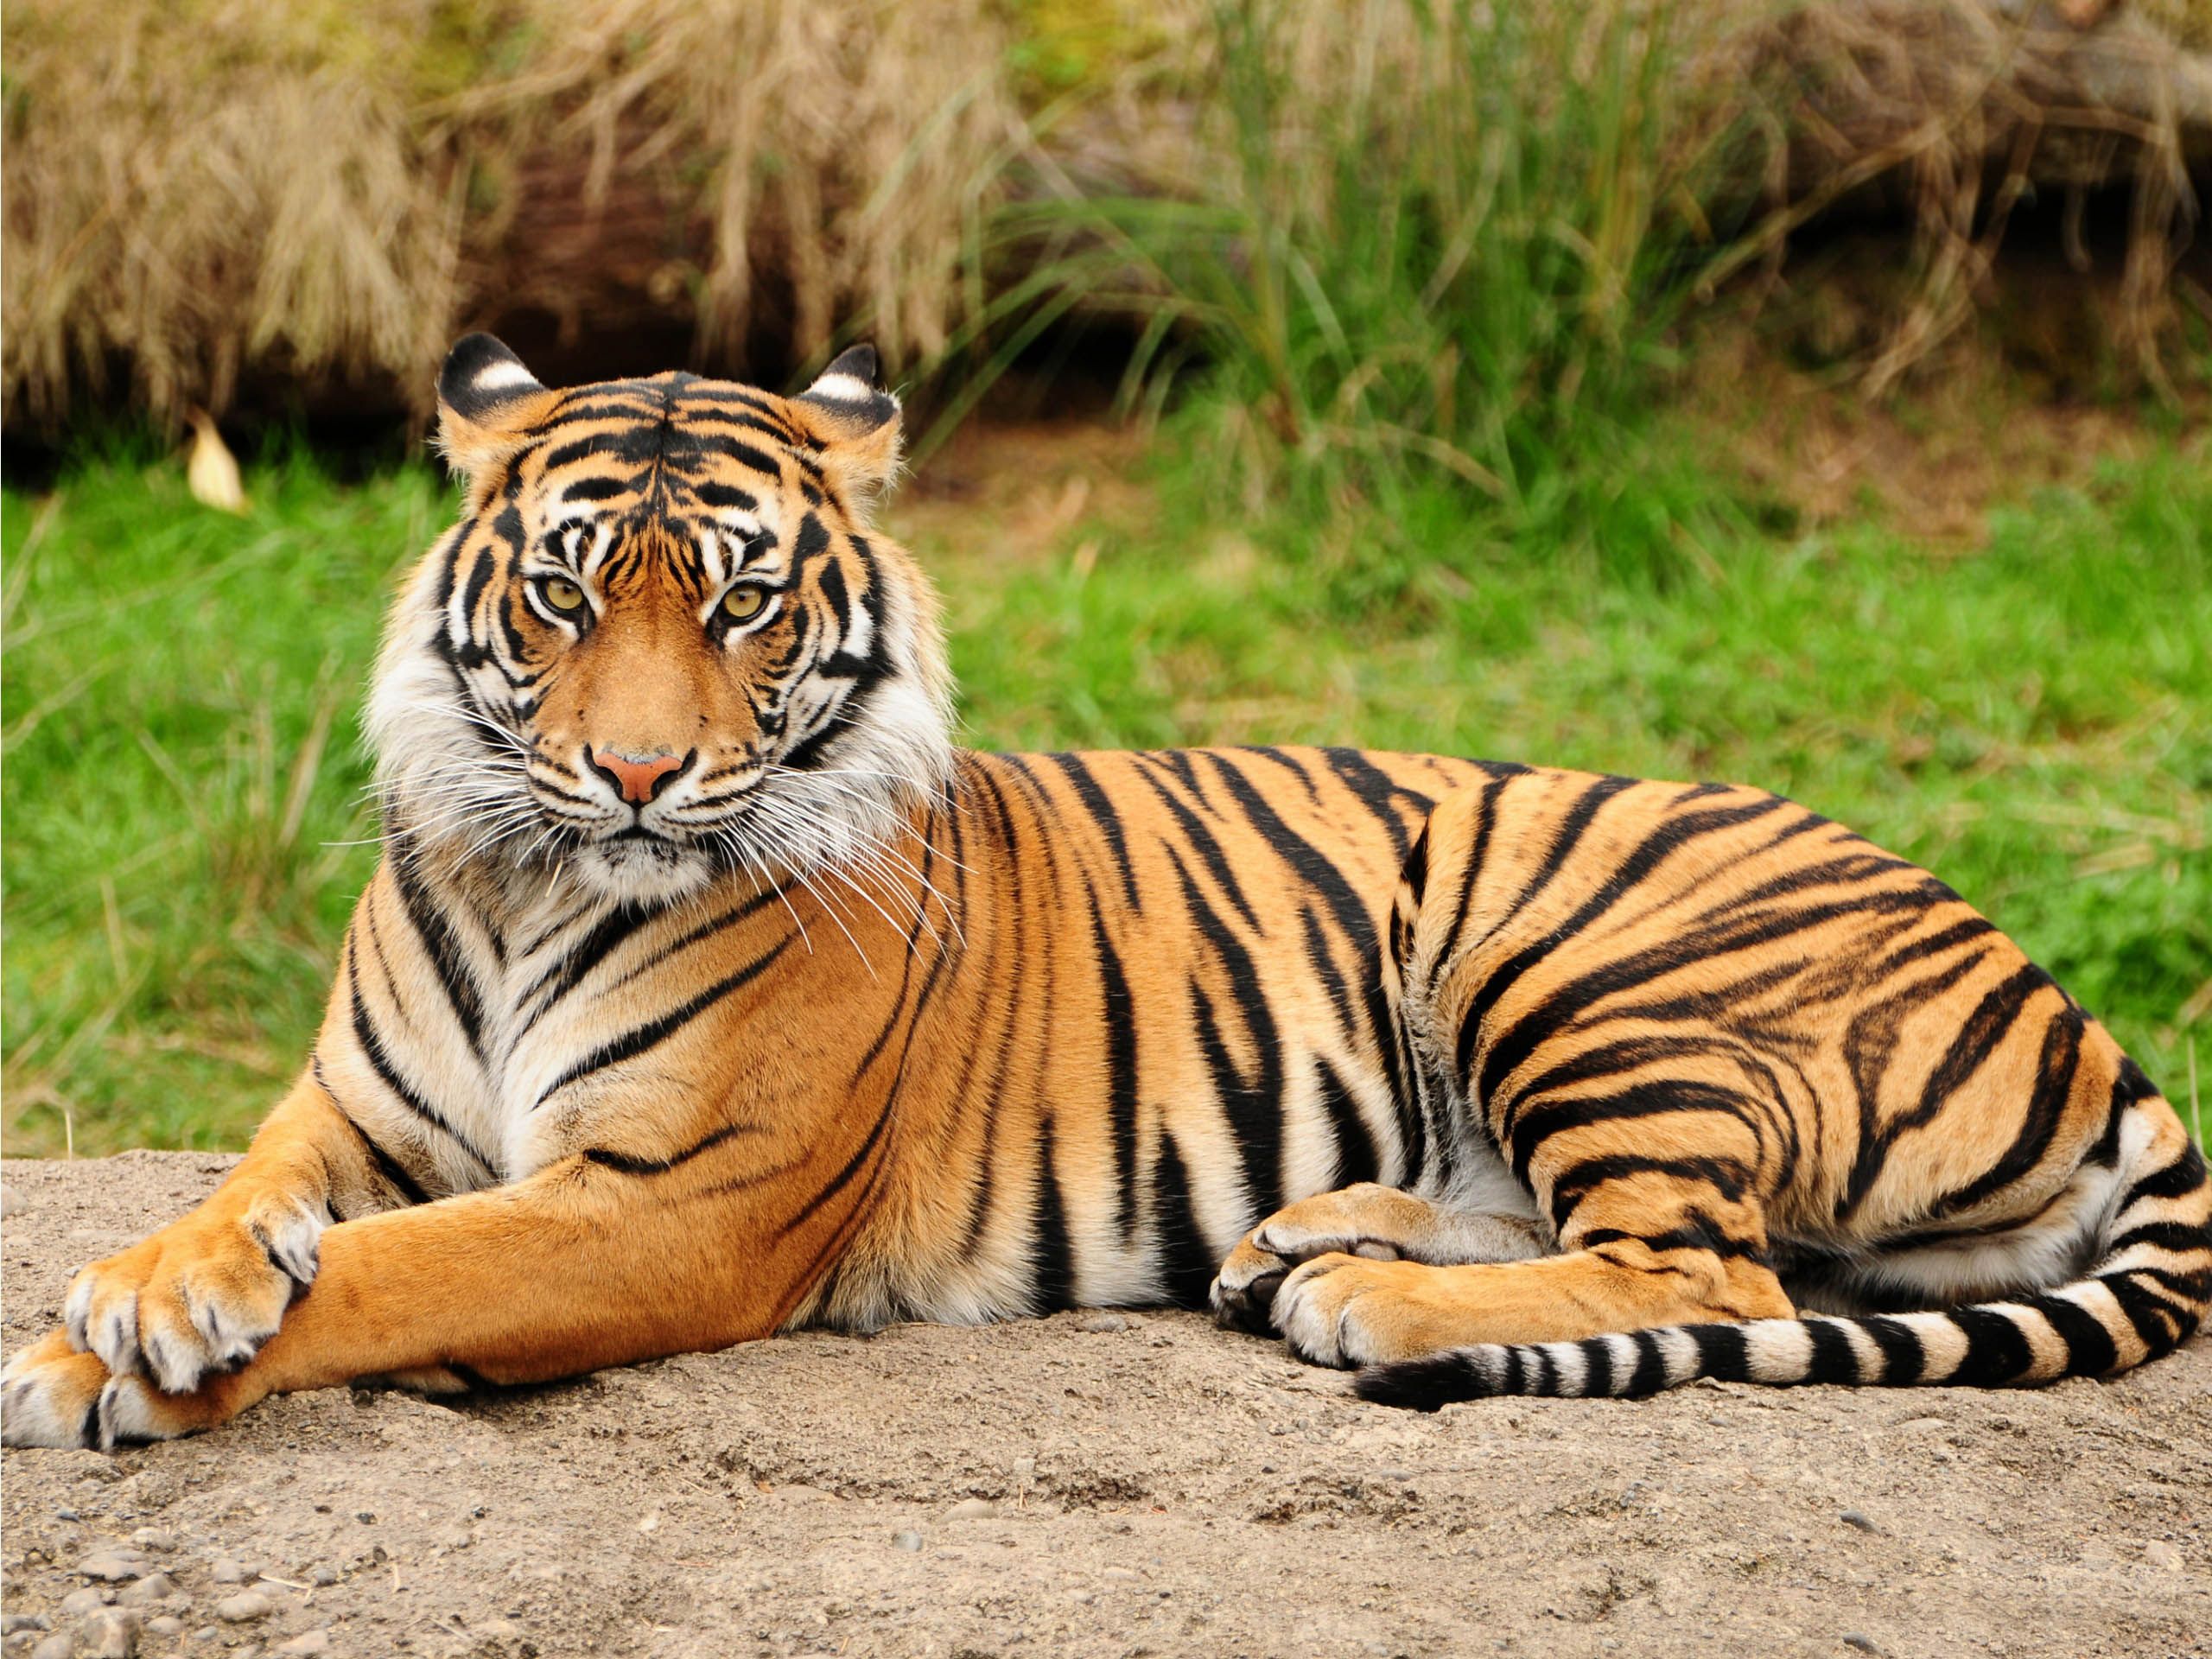 Tiger photo 